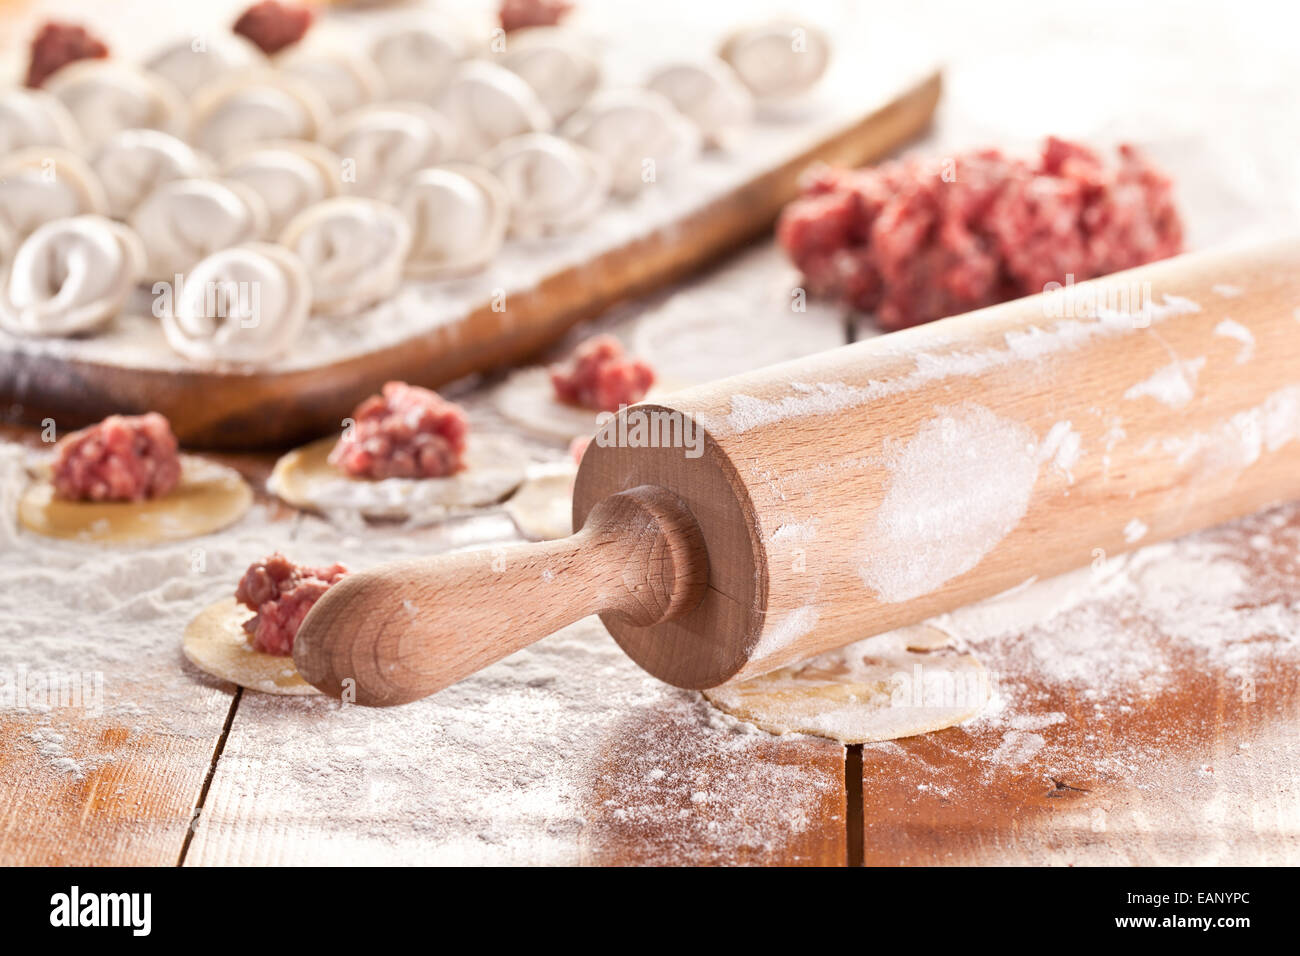 Dumplings. Uncooked on the wooden desk. Stock Photo